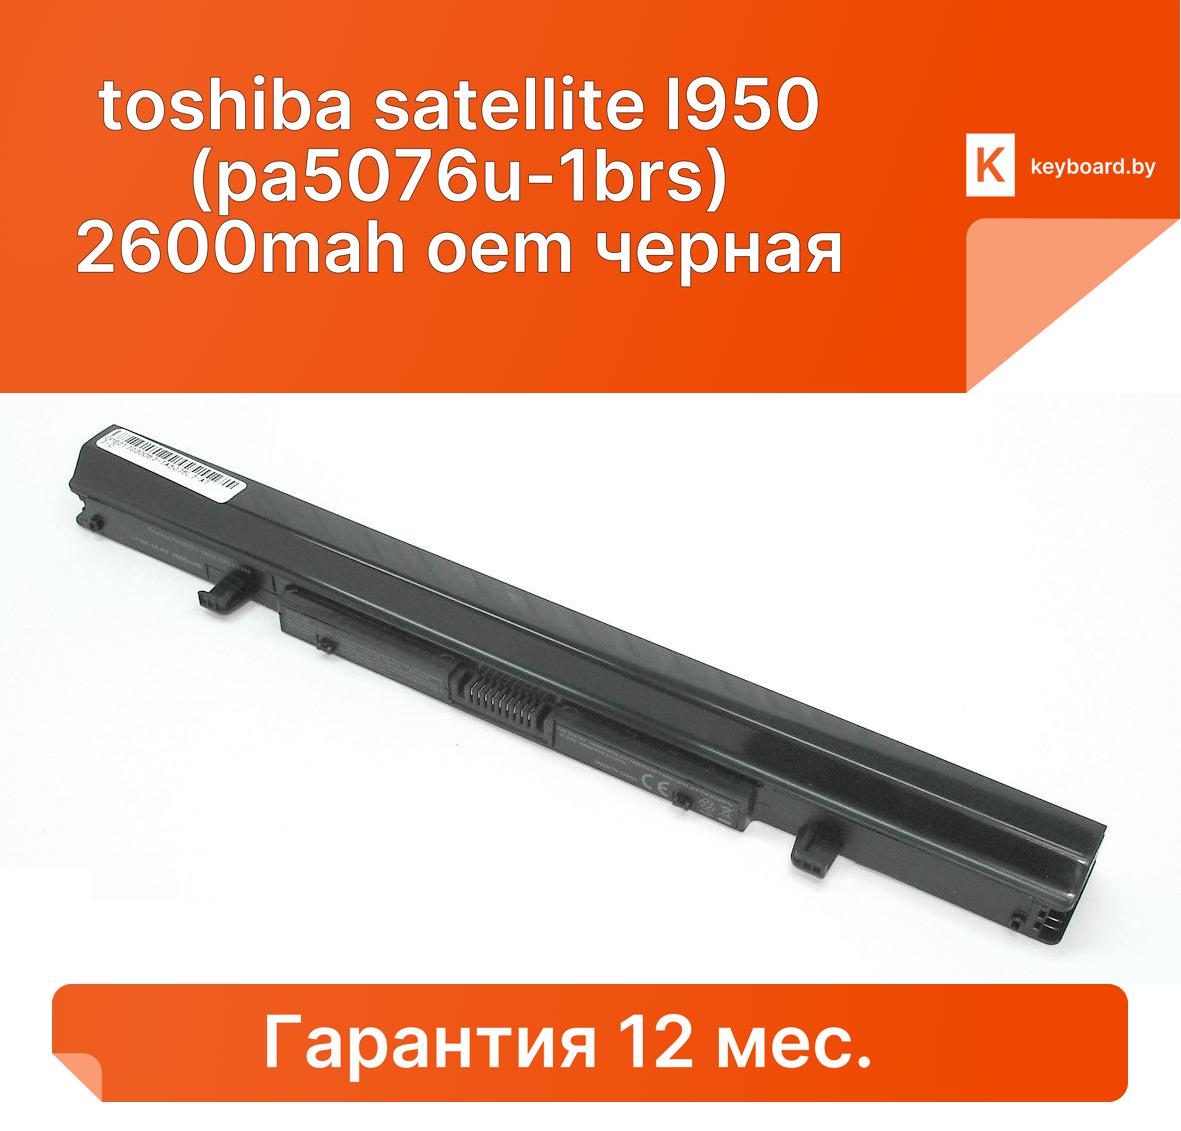 Аккумуляторная батарея для ноутбука toshiba satellite l950 (pa5076u-1brs) 2600mah oem черная